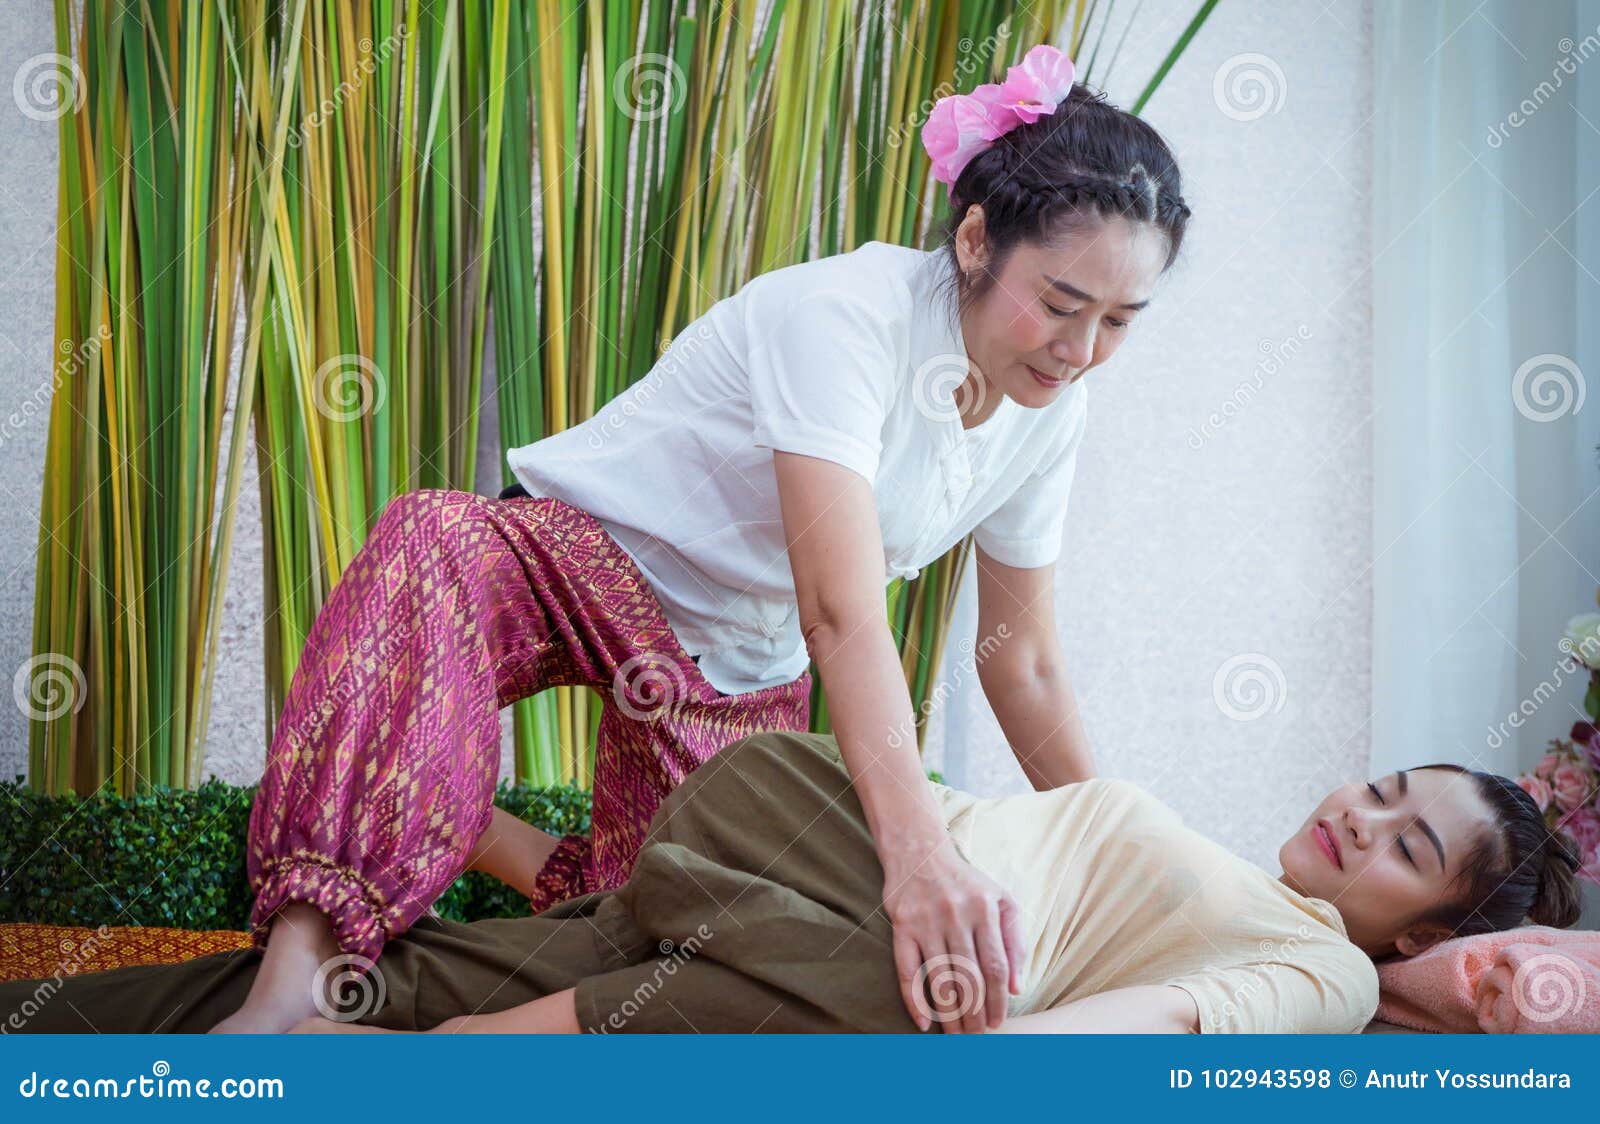 david marius recommends asian lesbian oil massage pic